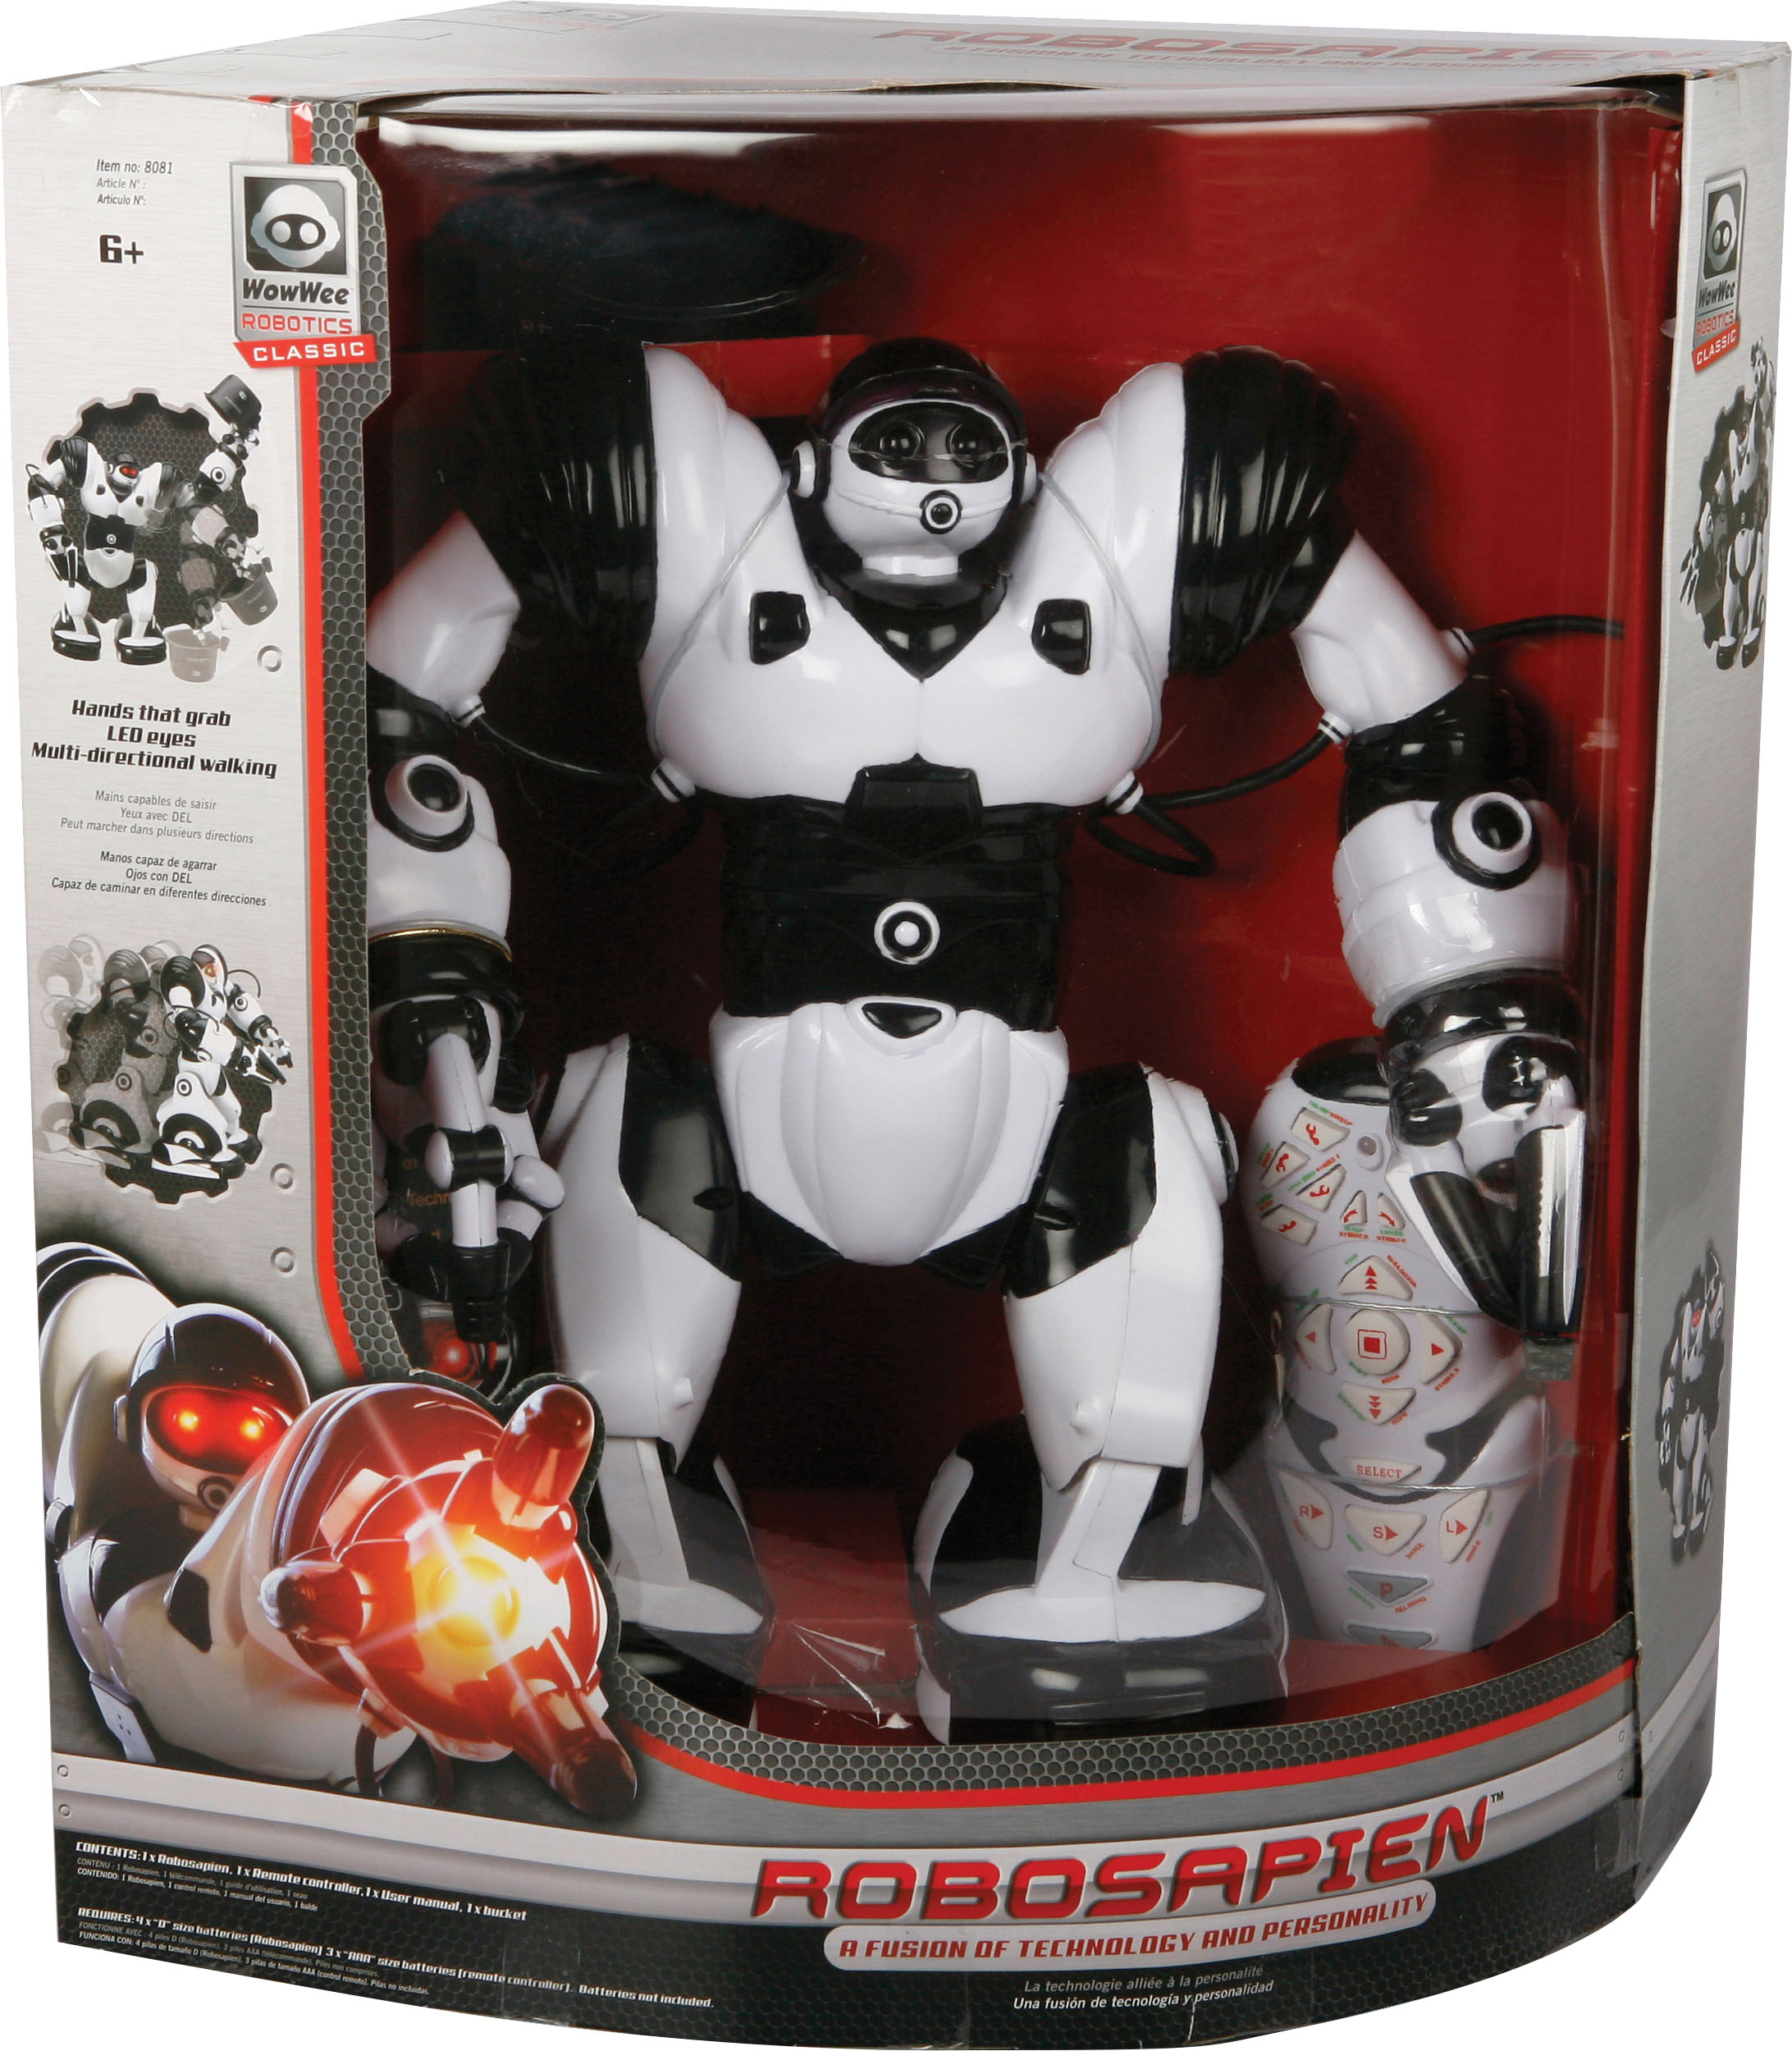 WowWee Robosapien Humanoid Toy Robot 14" 2004,w/o Remote Control 